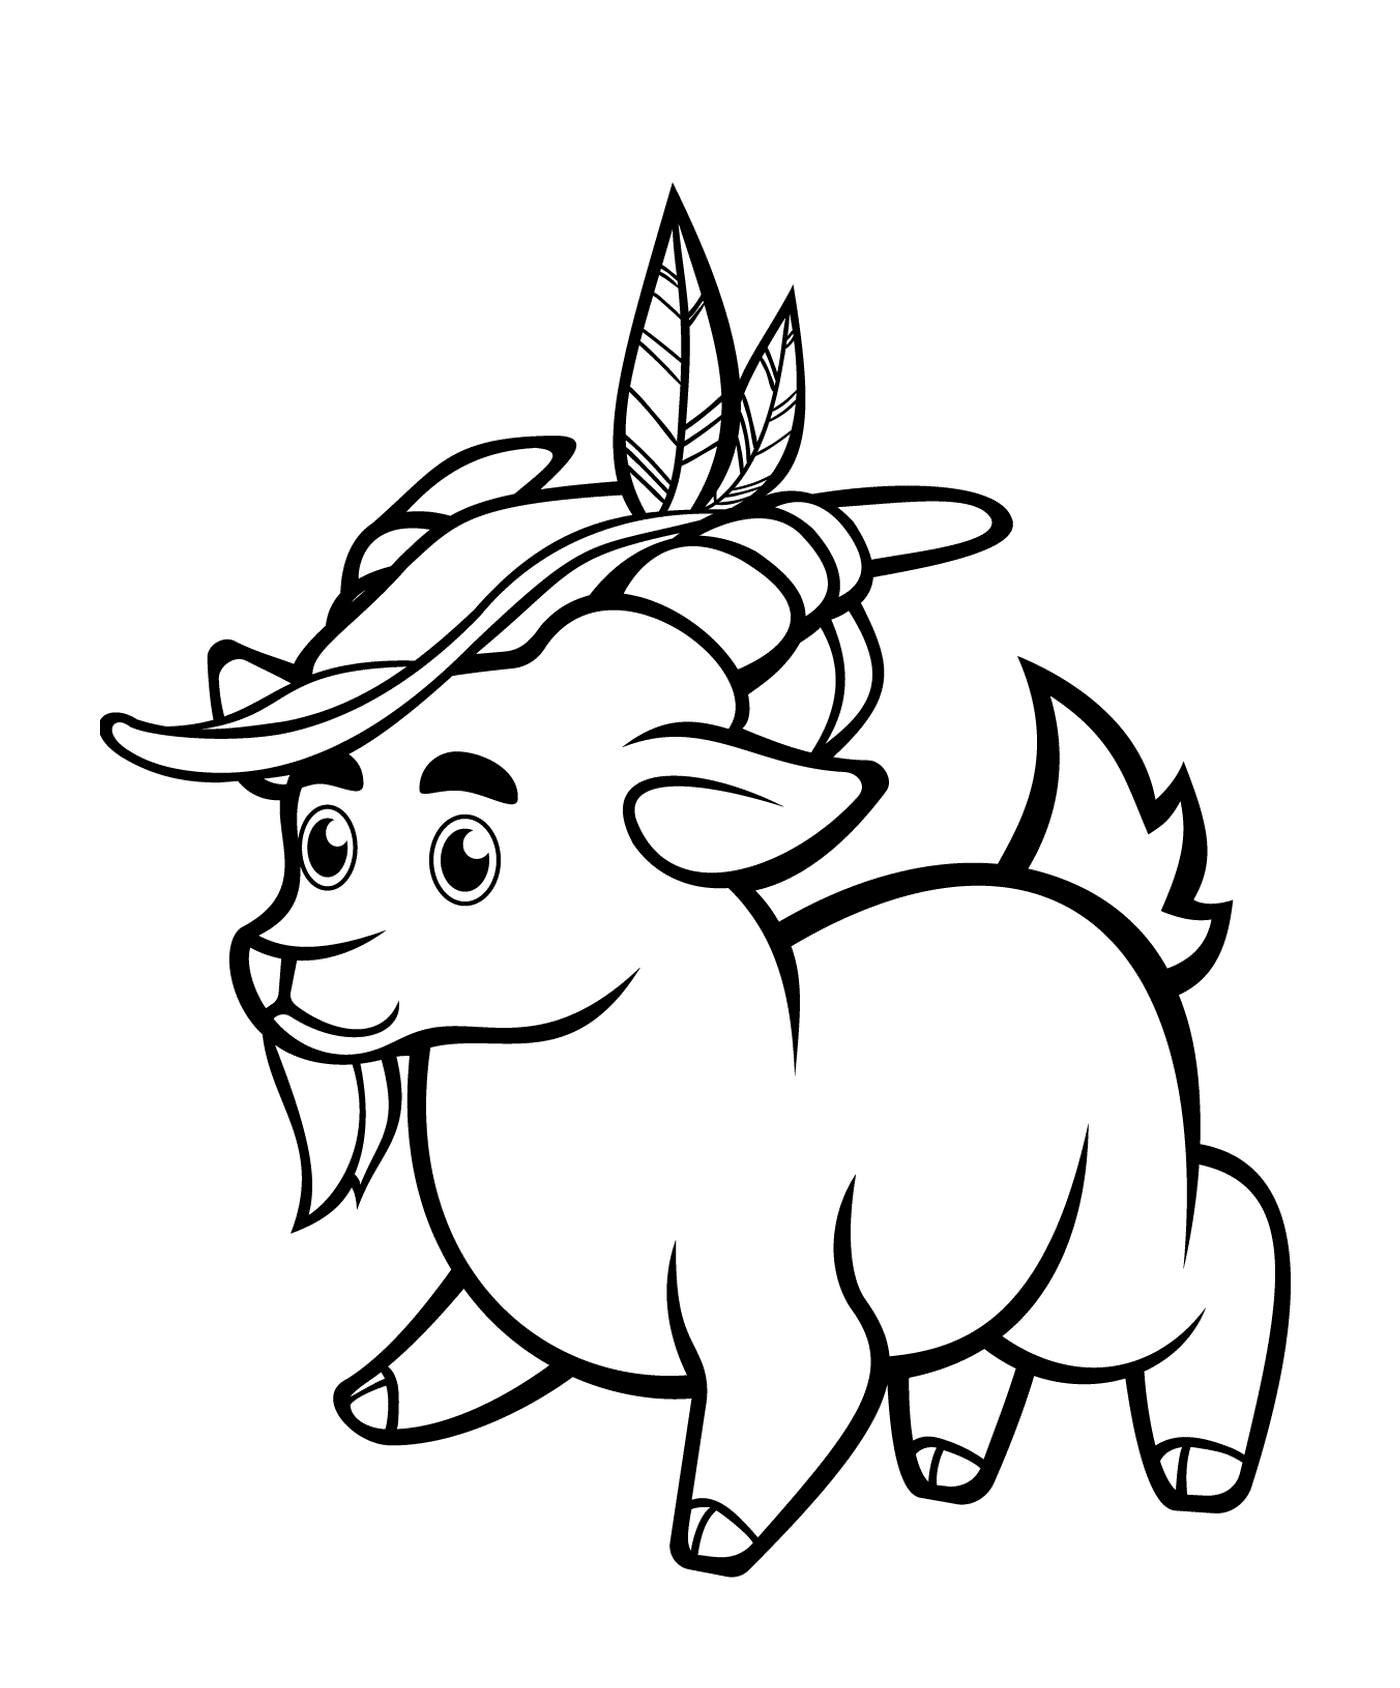  Un animal con sombrero alpino 